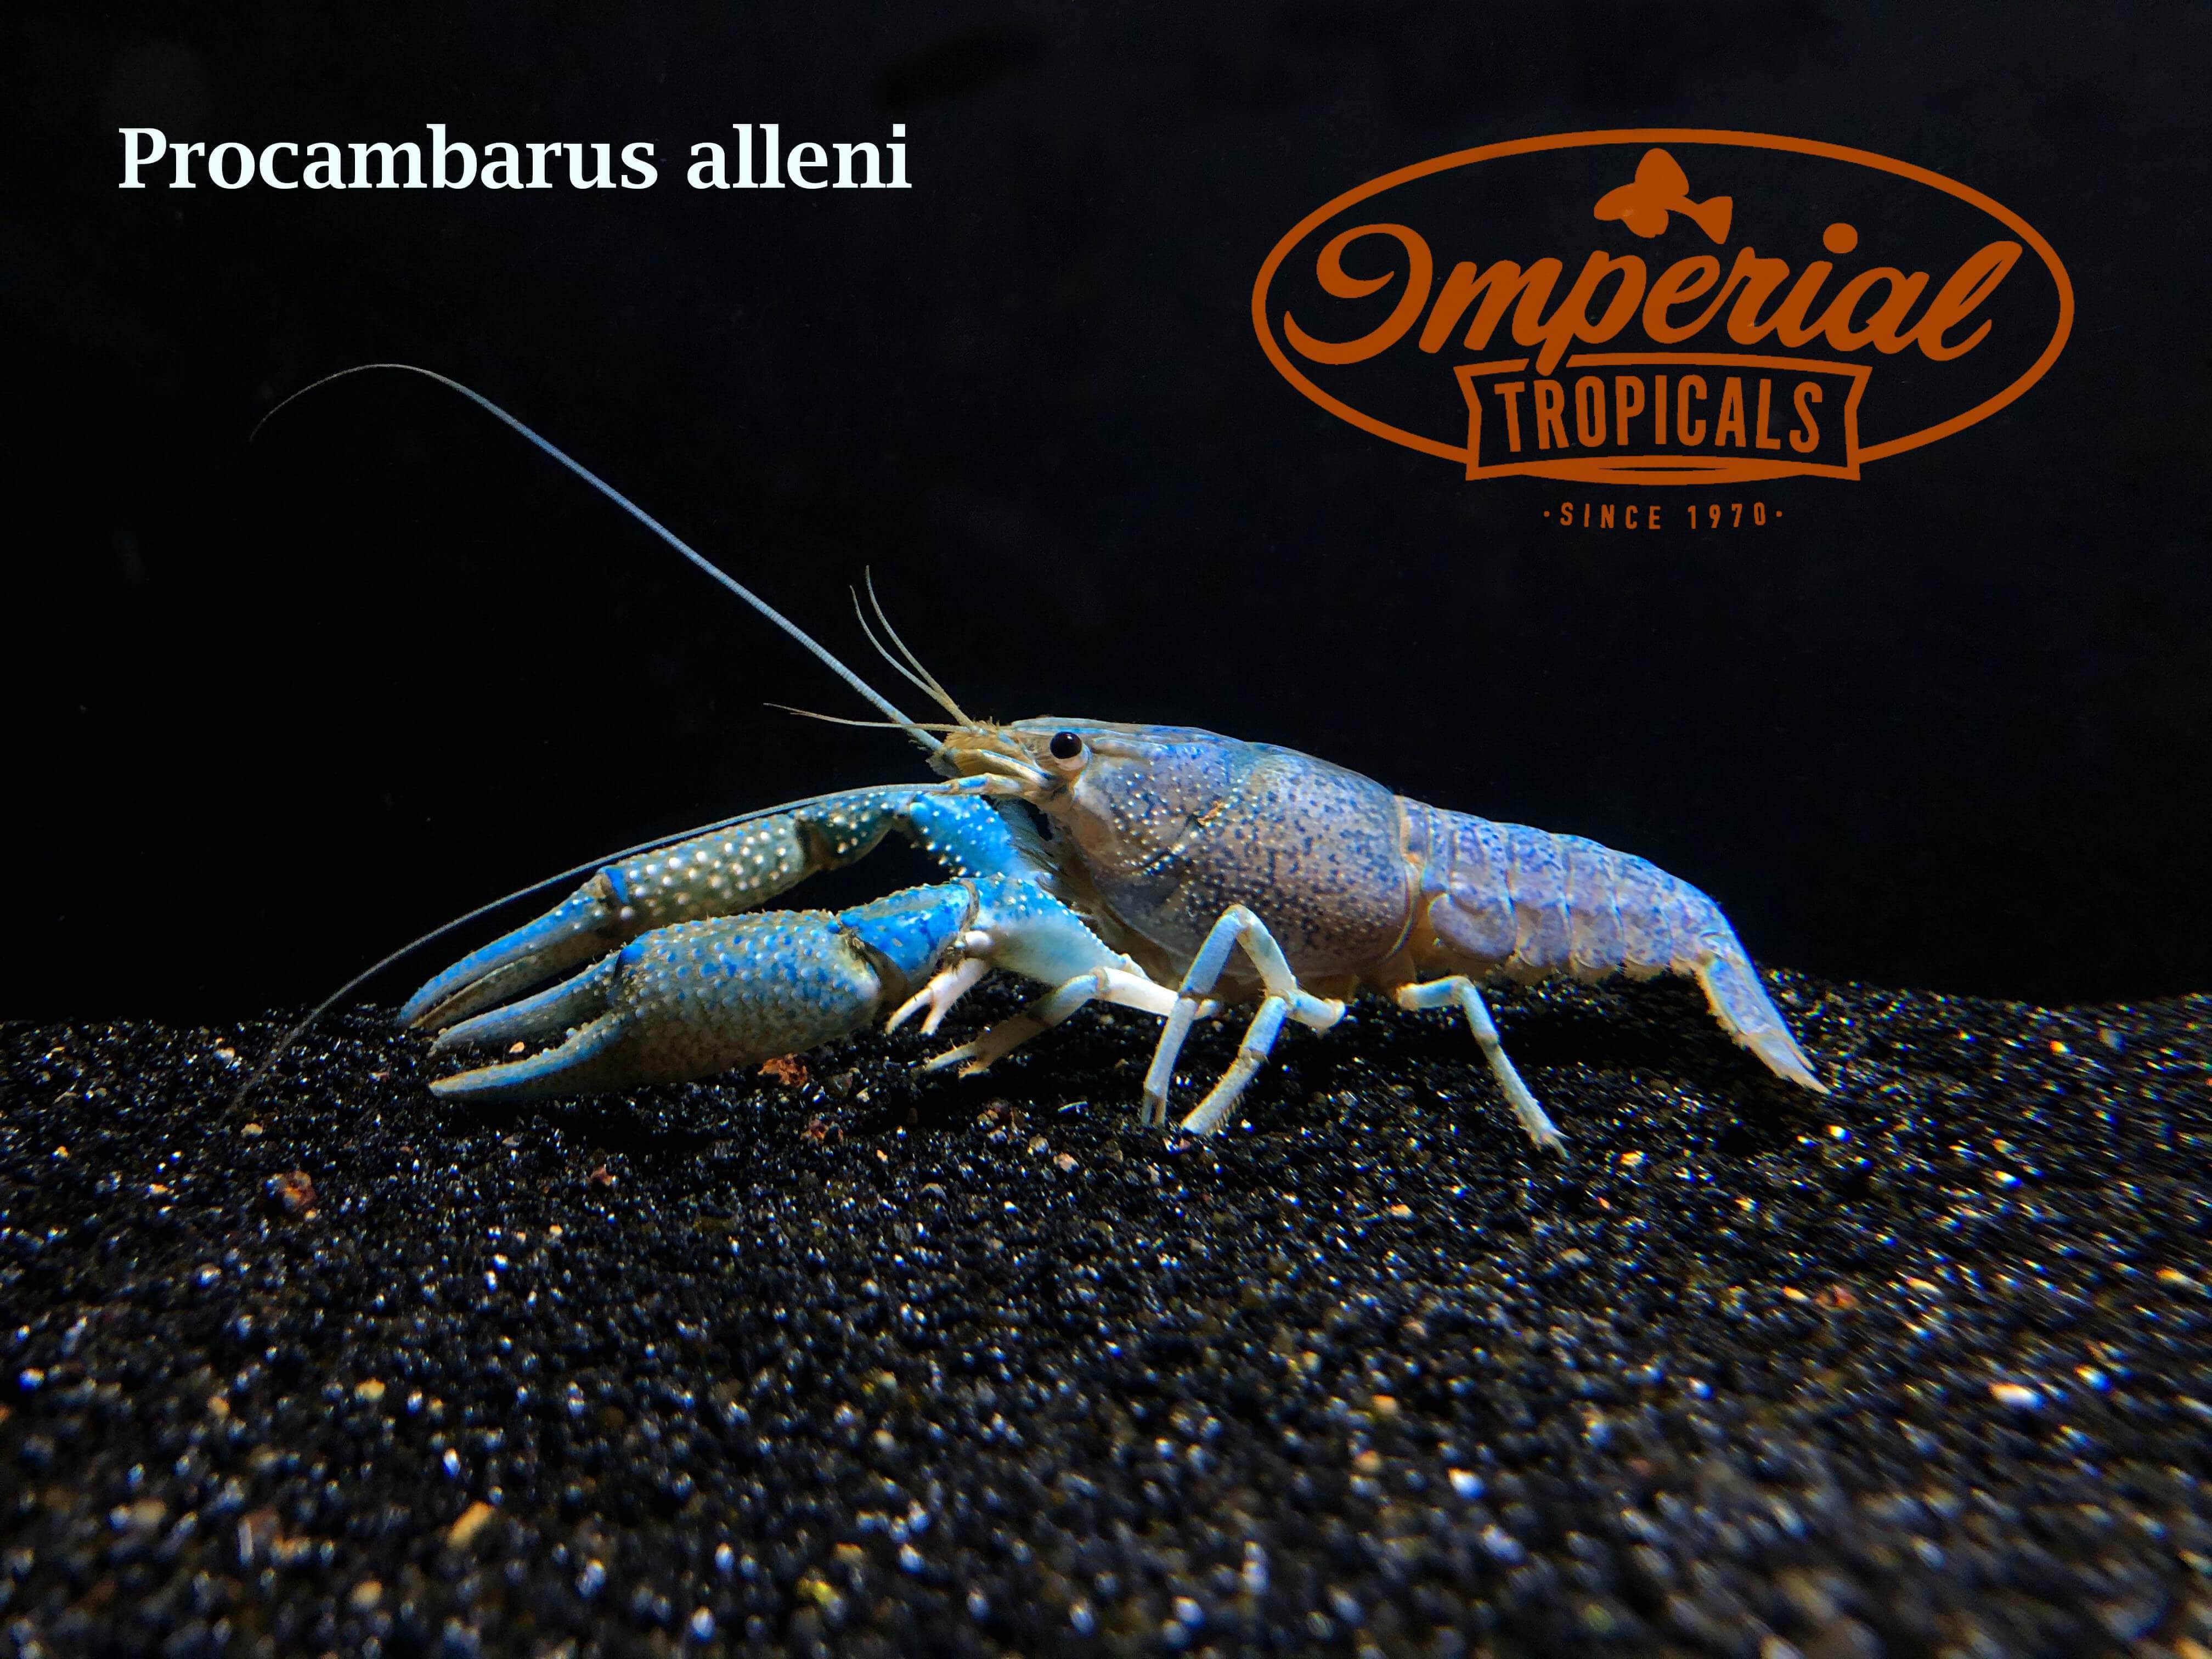 Electric Blue Crayfish (Procambarus alleni) - shop Imperial Tropicals